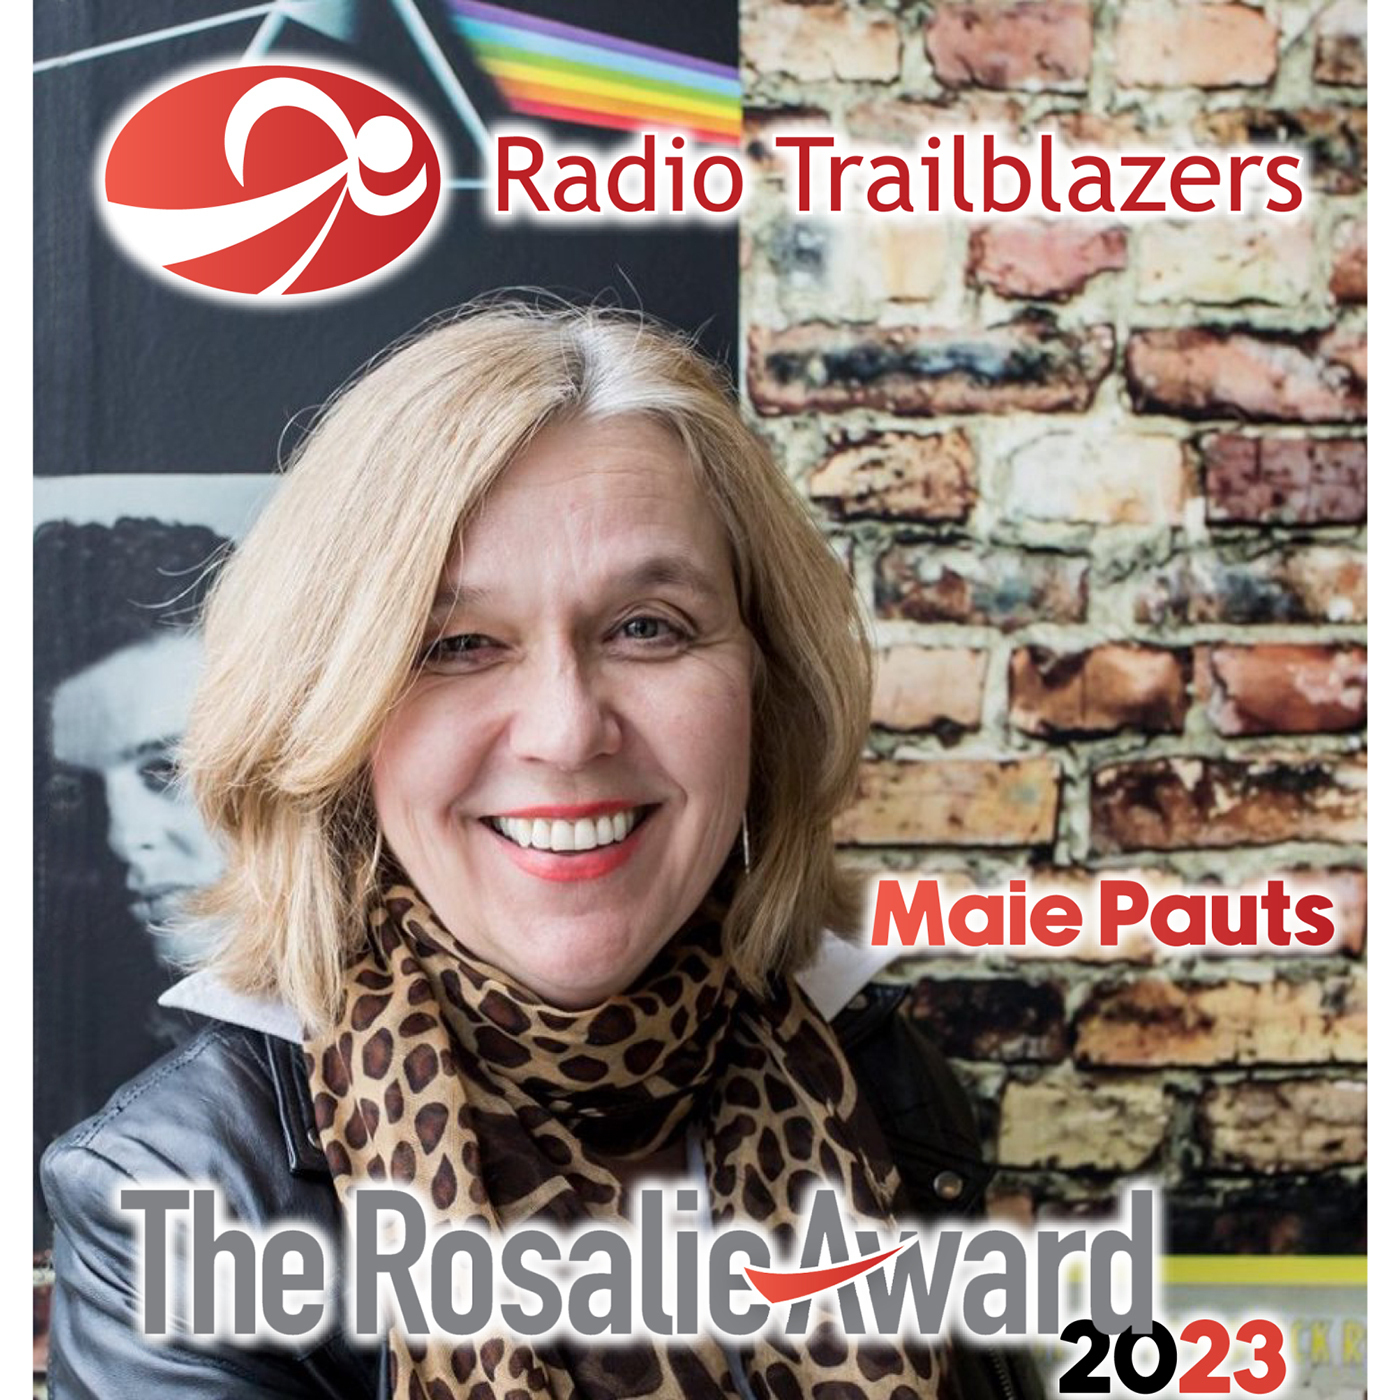 Radio Trailblazer Maie Pauts